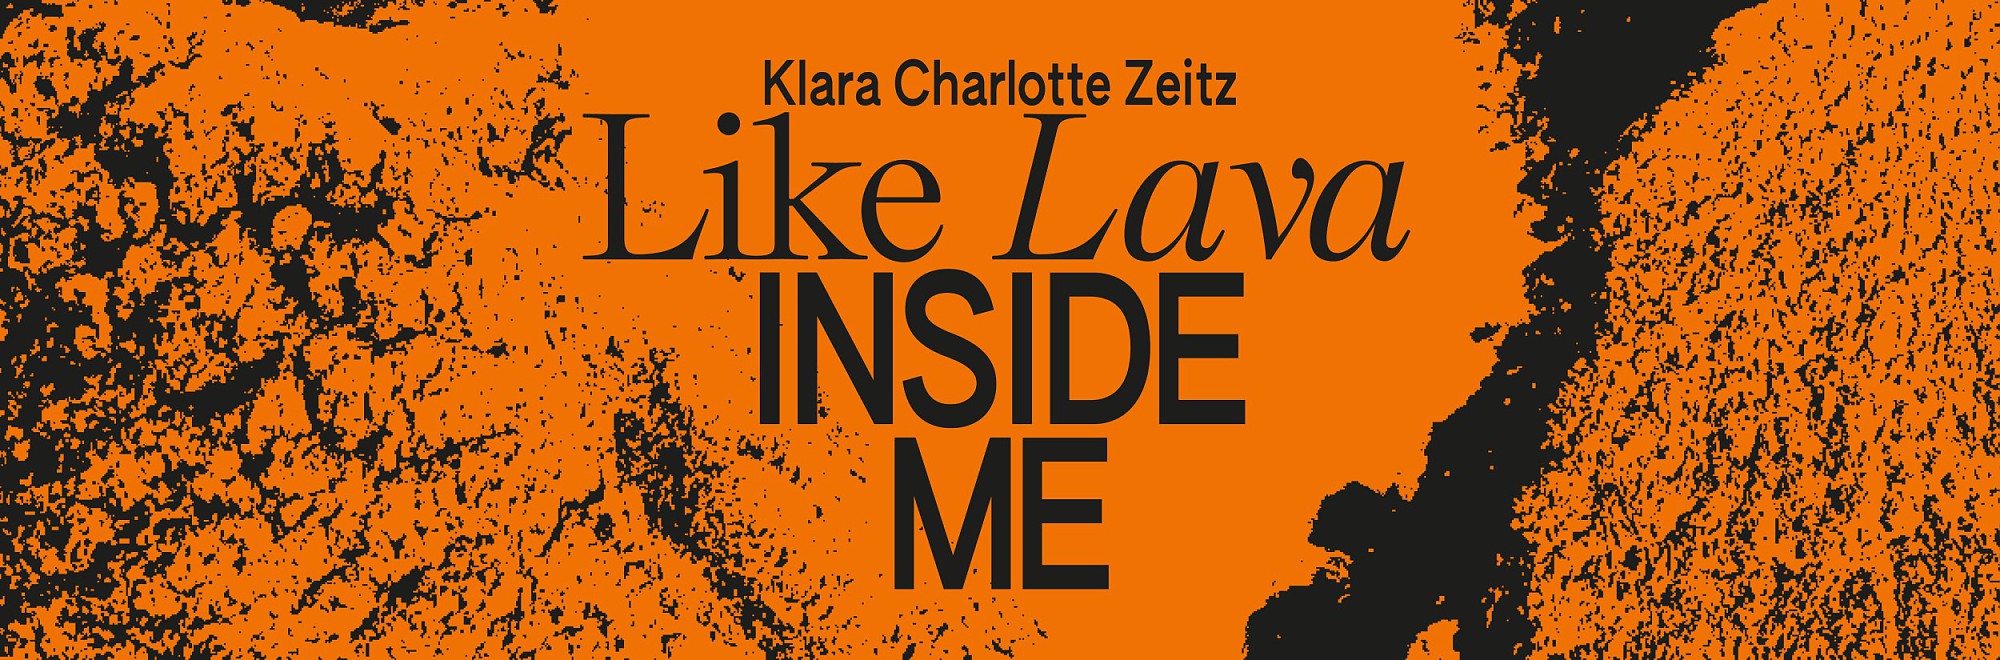 Klara Charlotte Zeitz – LIKE LAVA INSIDE ME